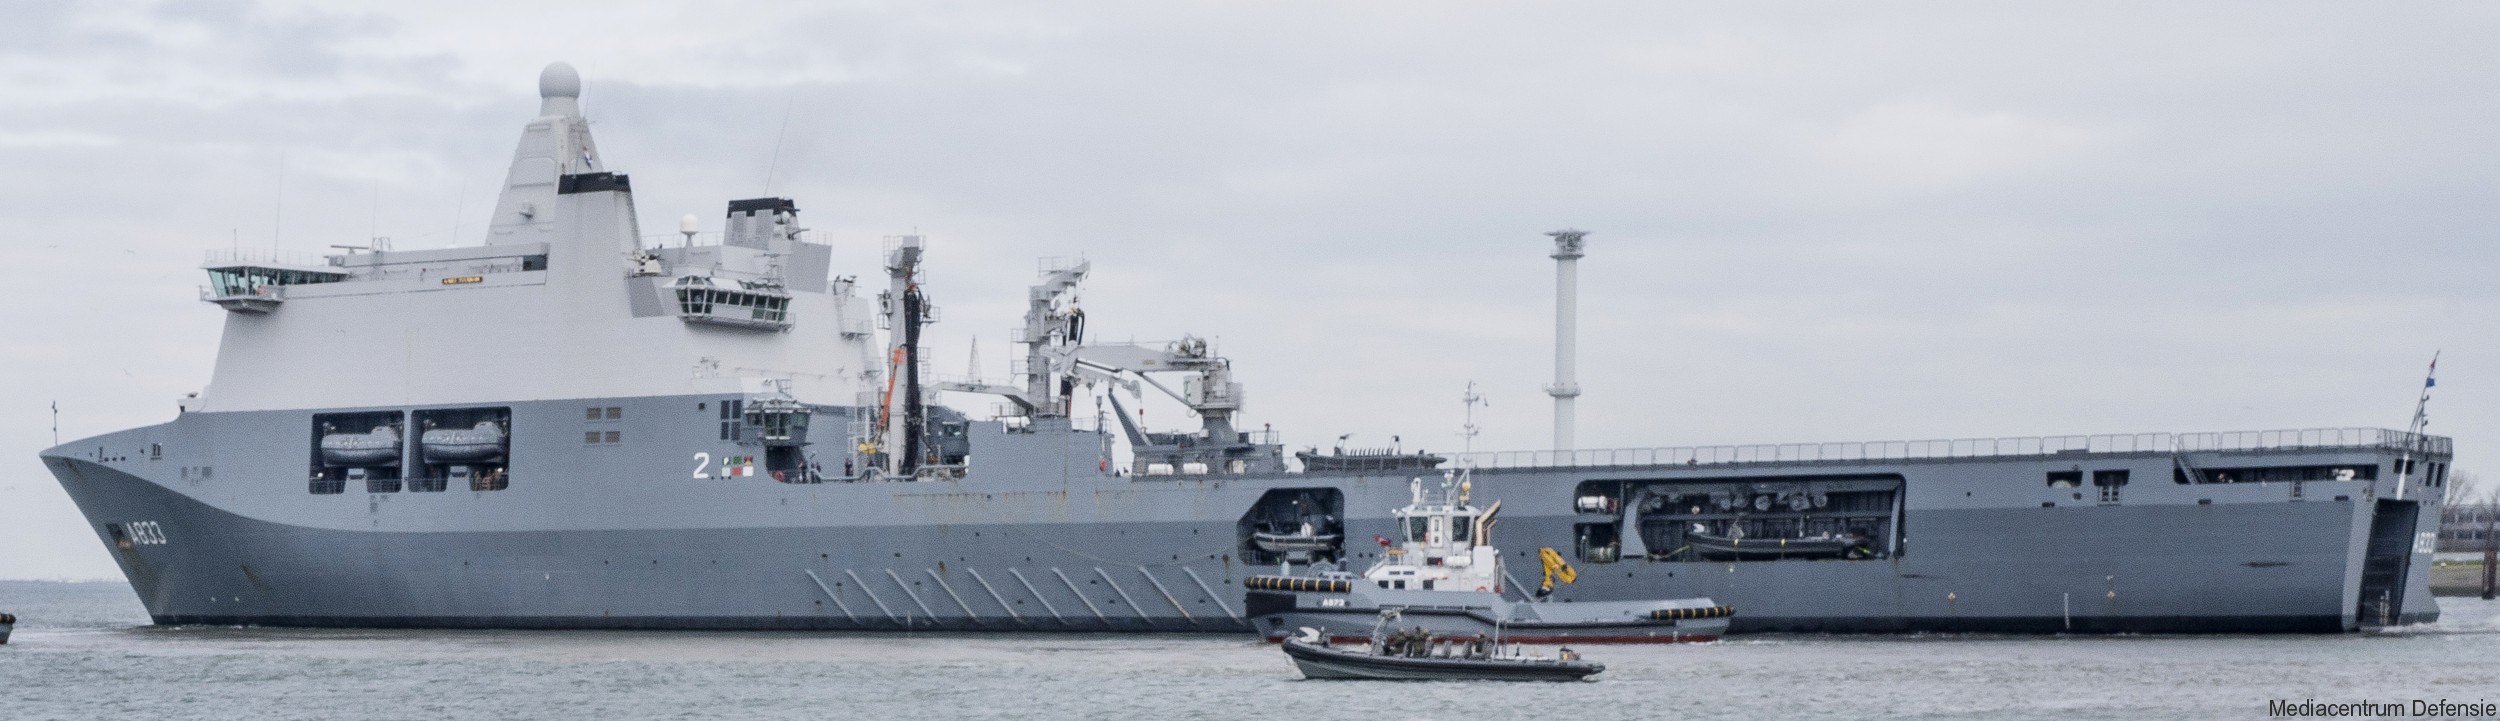 a-833 hnlms karel doorman joint support ship royal netherlands navy koninklijke marine 04